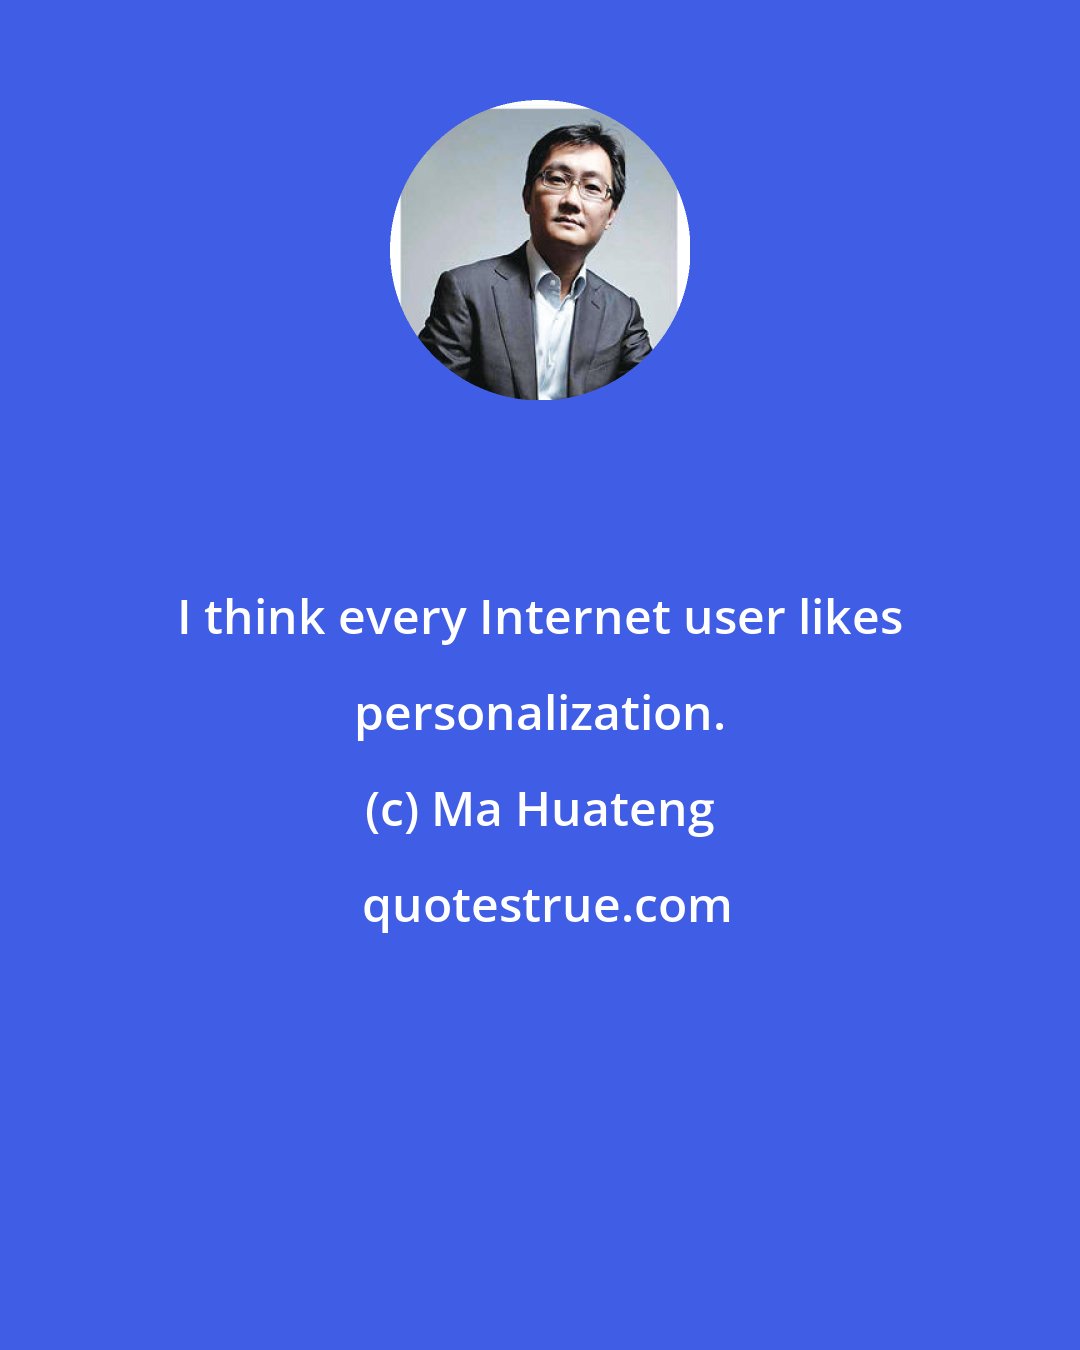 Ma Huateng: I think every Internet user likes personalization.